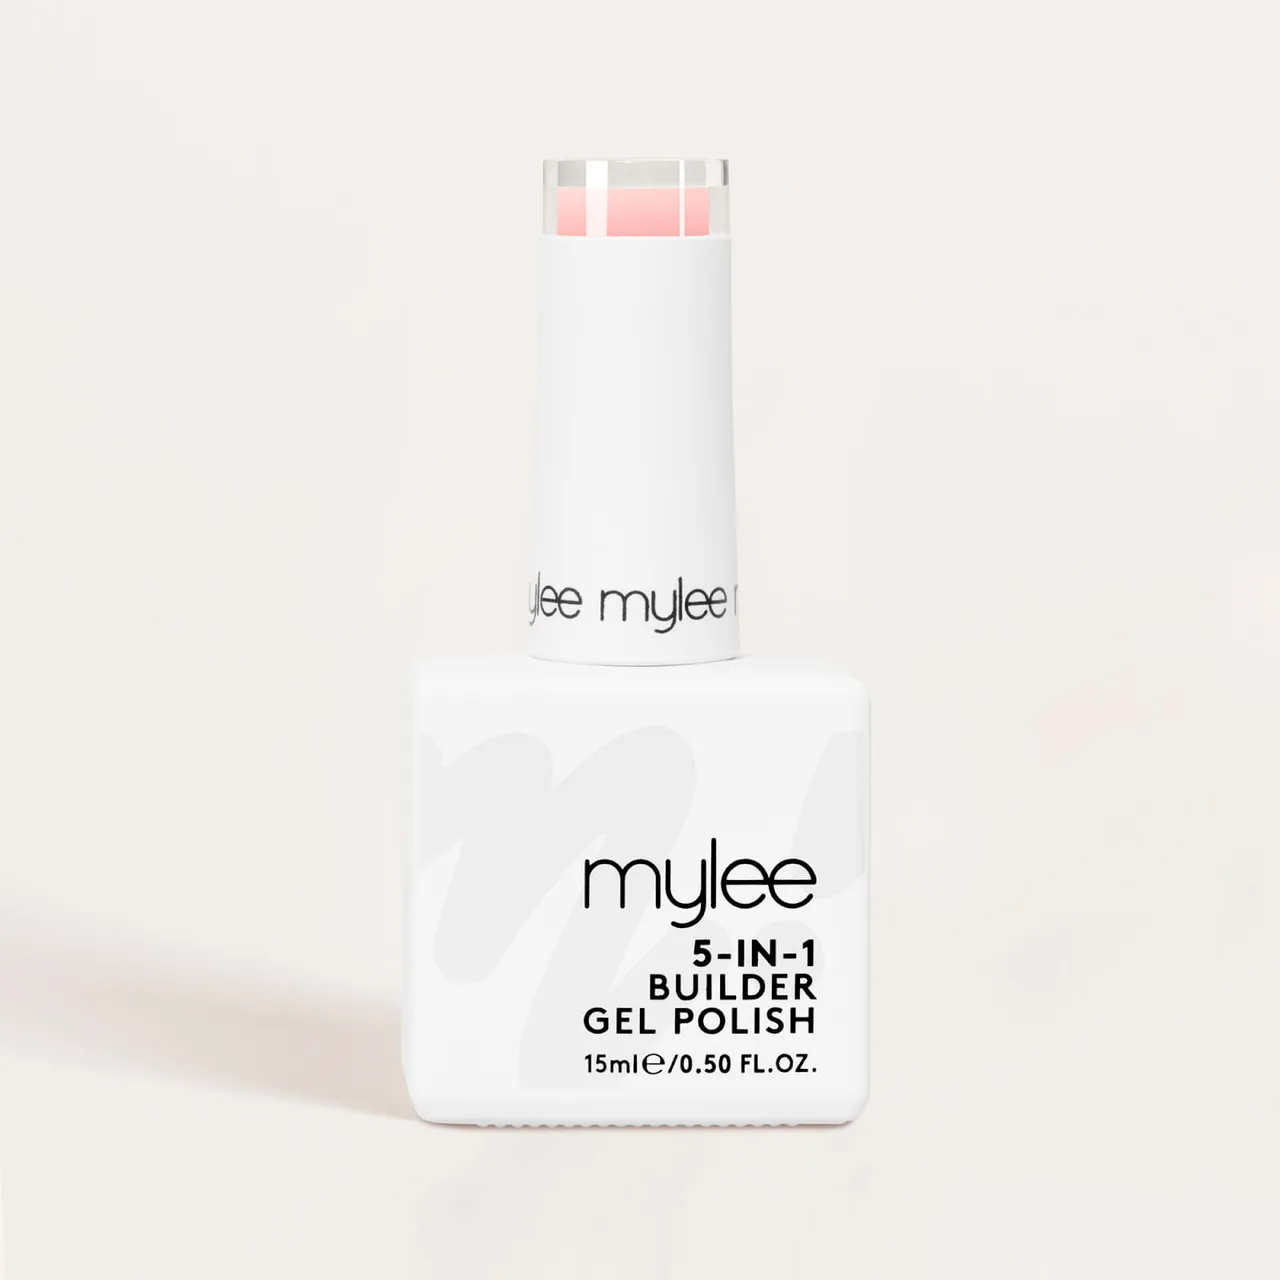 Mylee 5-in-1 Builder Gel Light Pink - 15ml